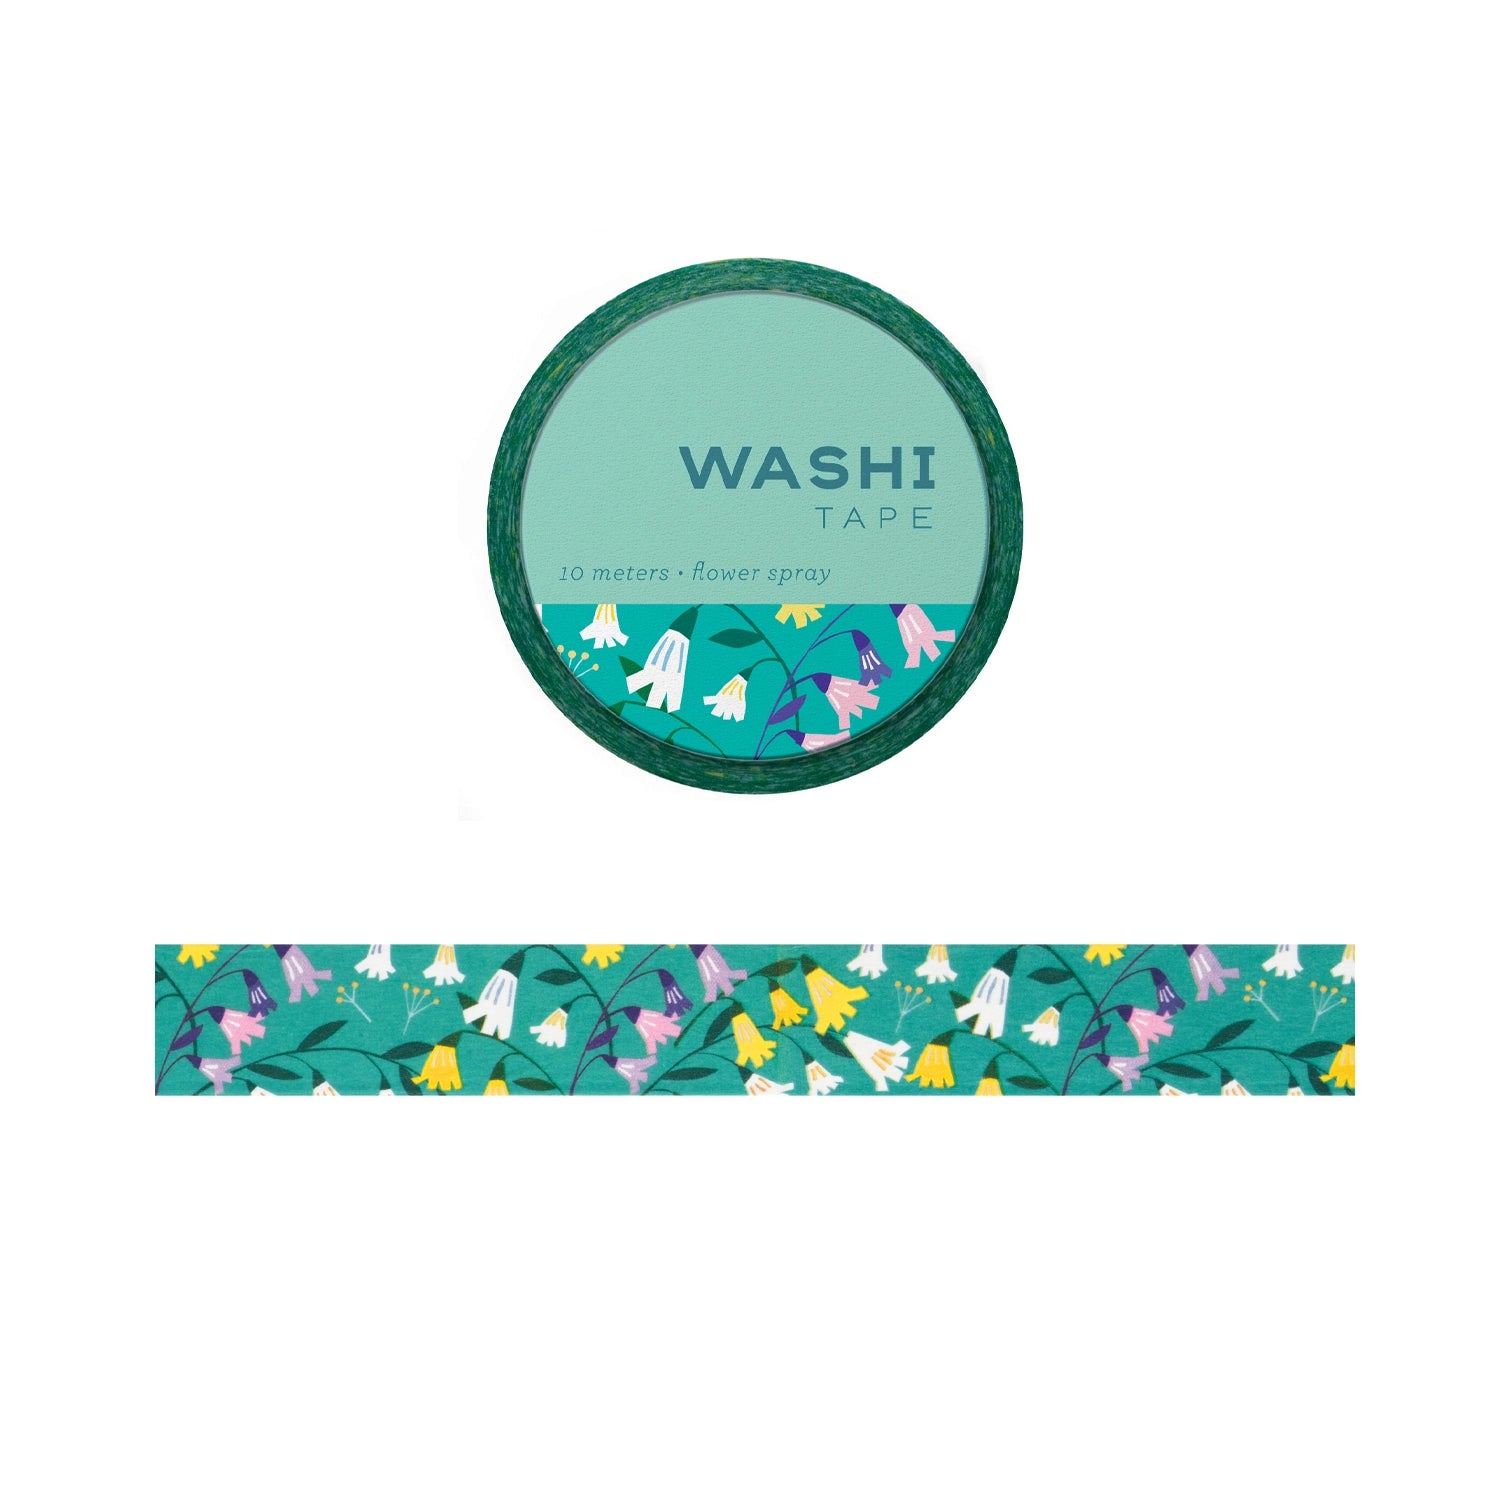 Washi Tape - Flower Spray